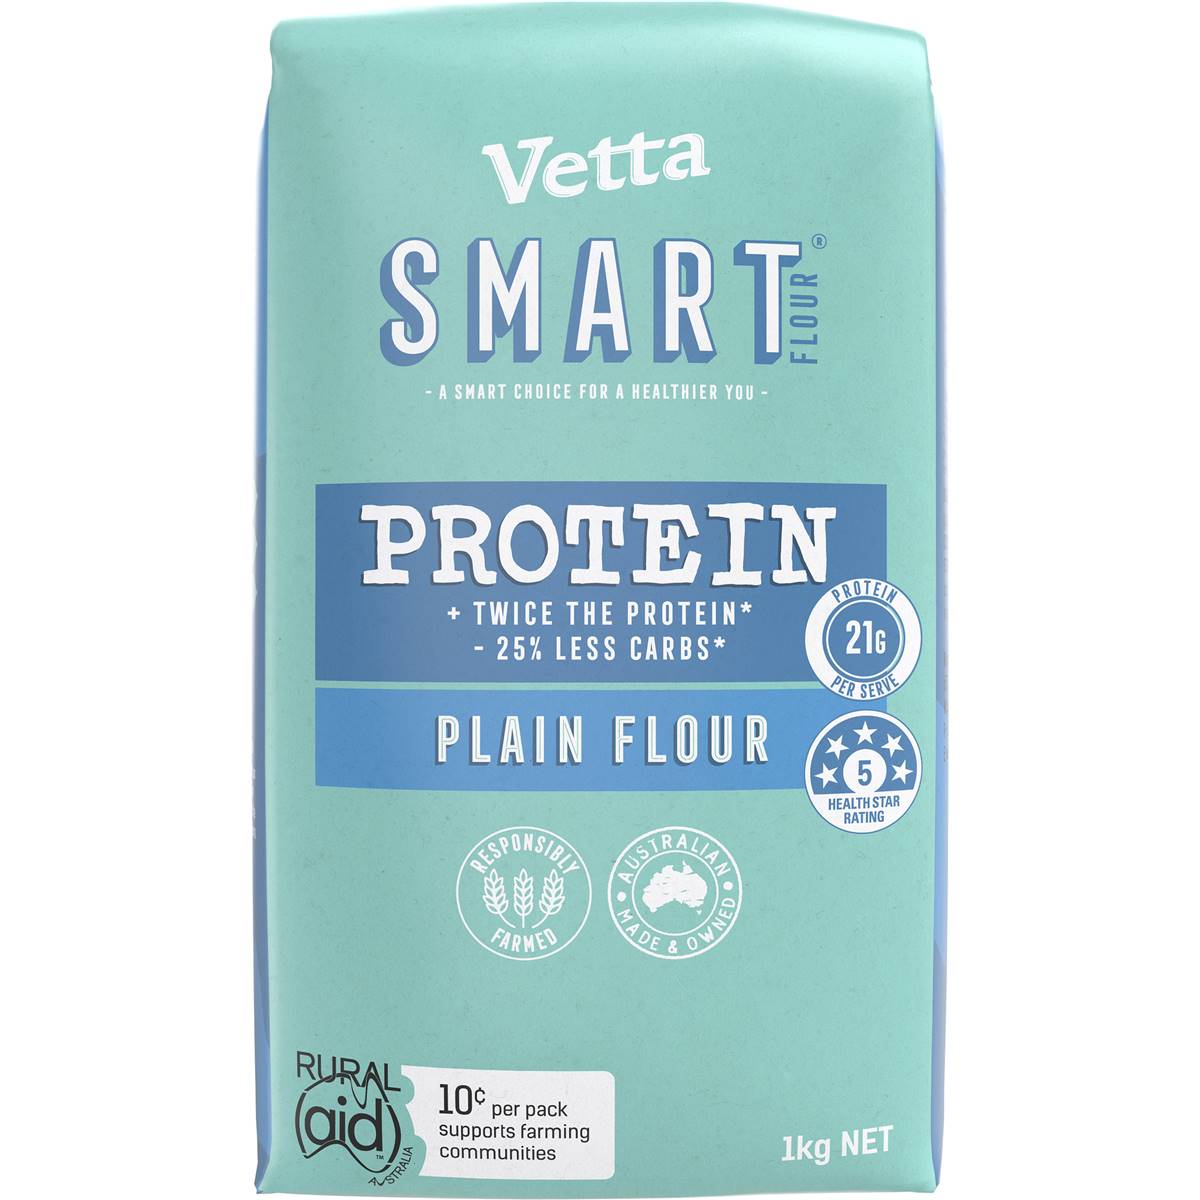 Calories in Vetta Smart Protein Plain Flour